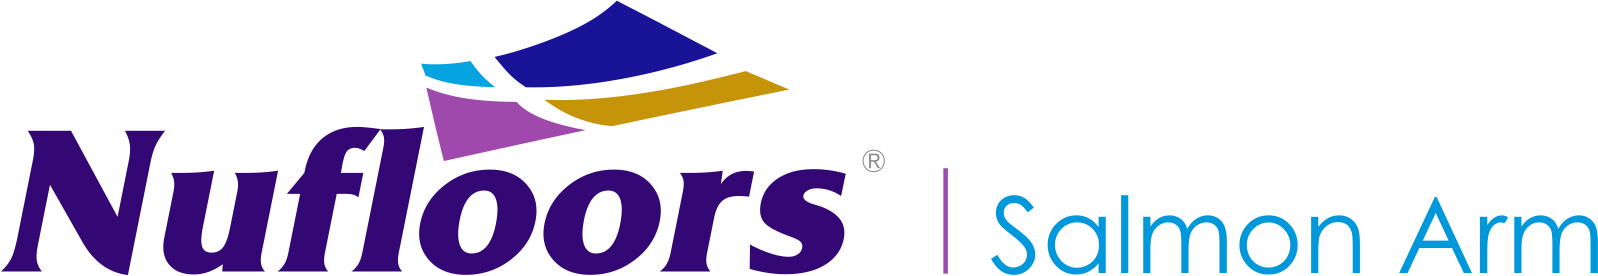 Nufloors Salmon Arm Secondary Logo